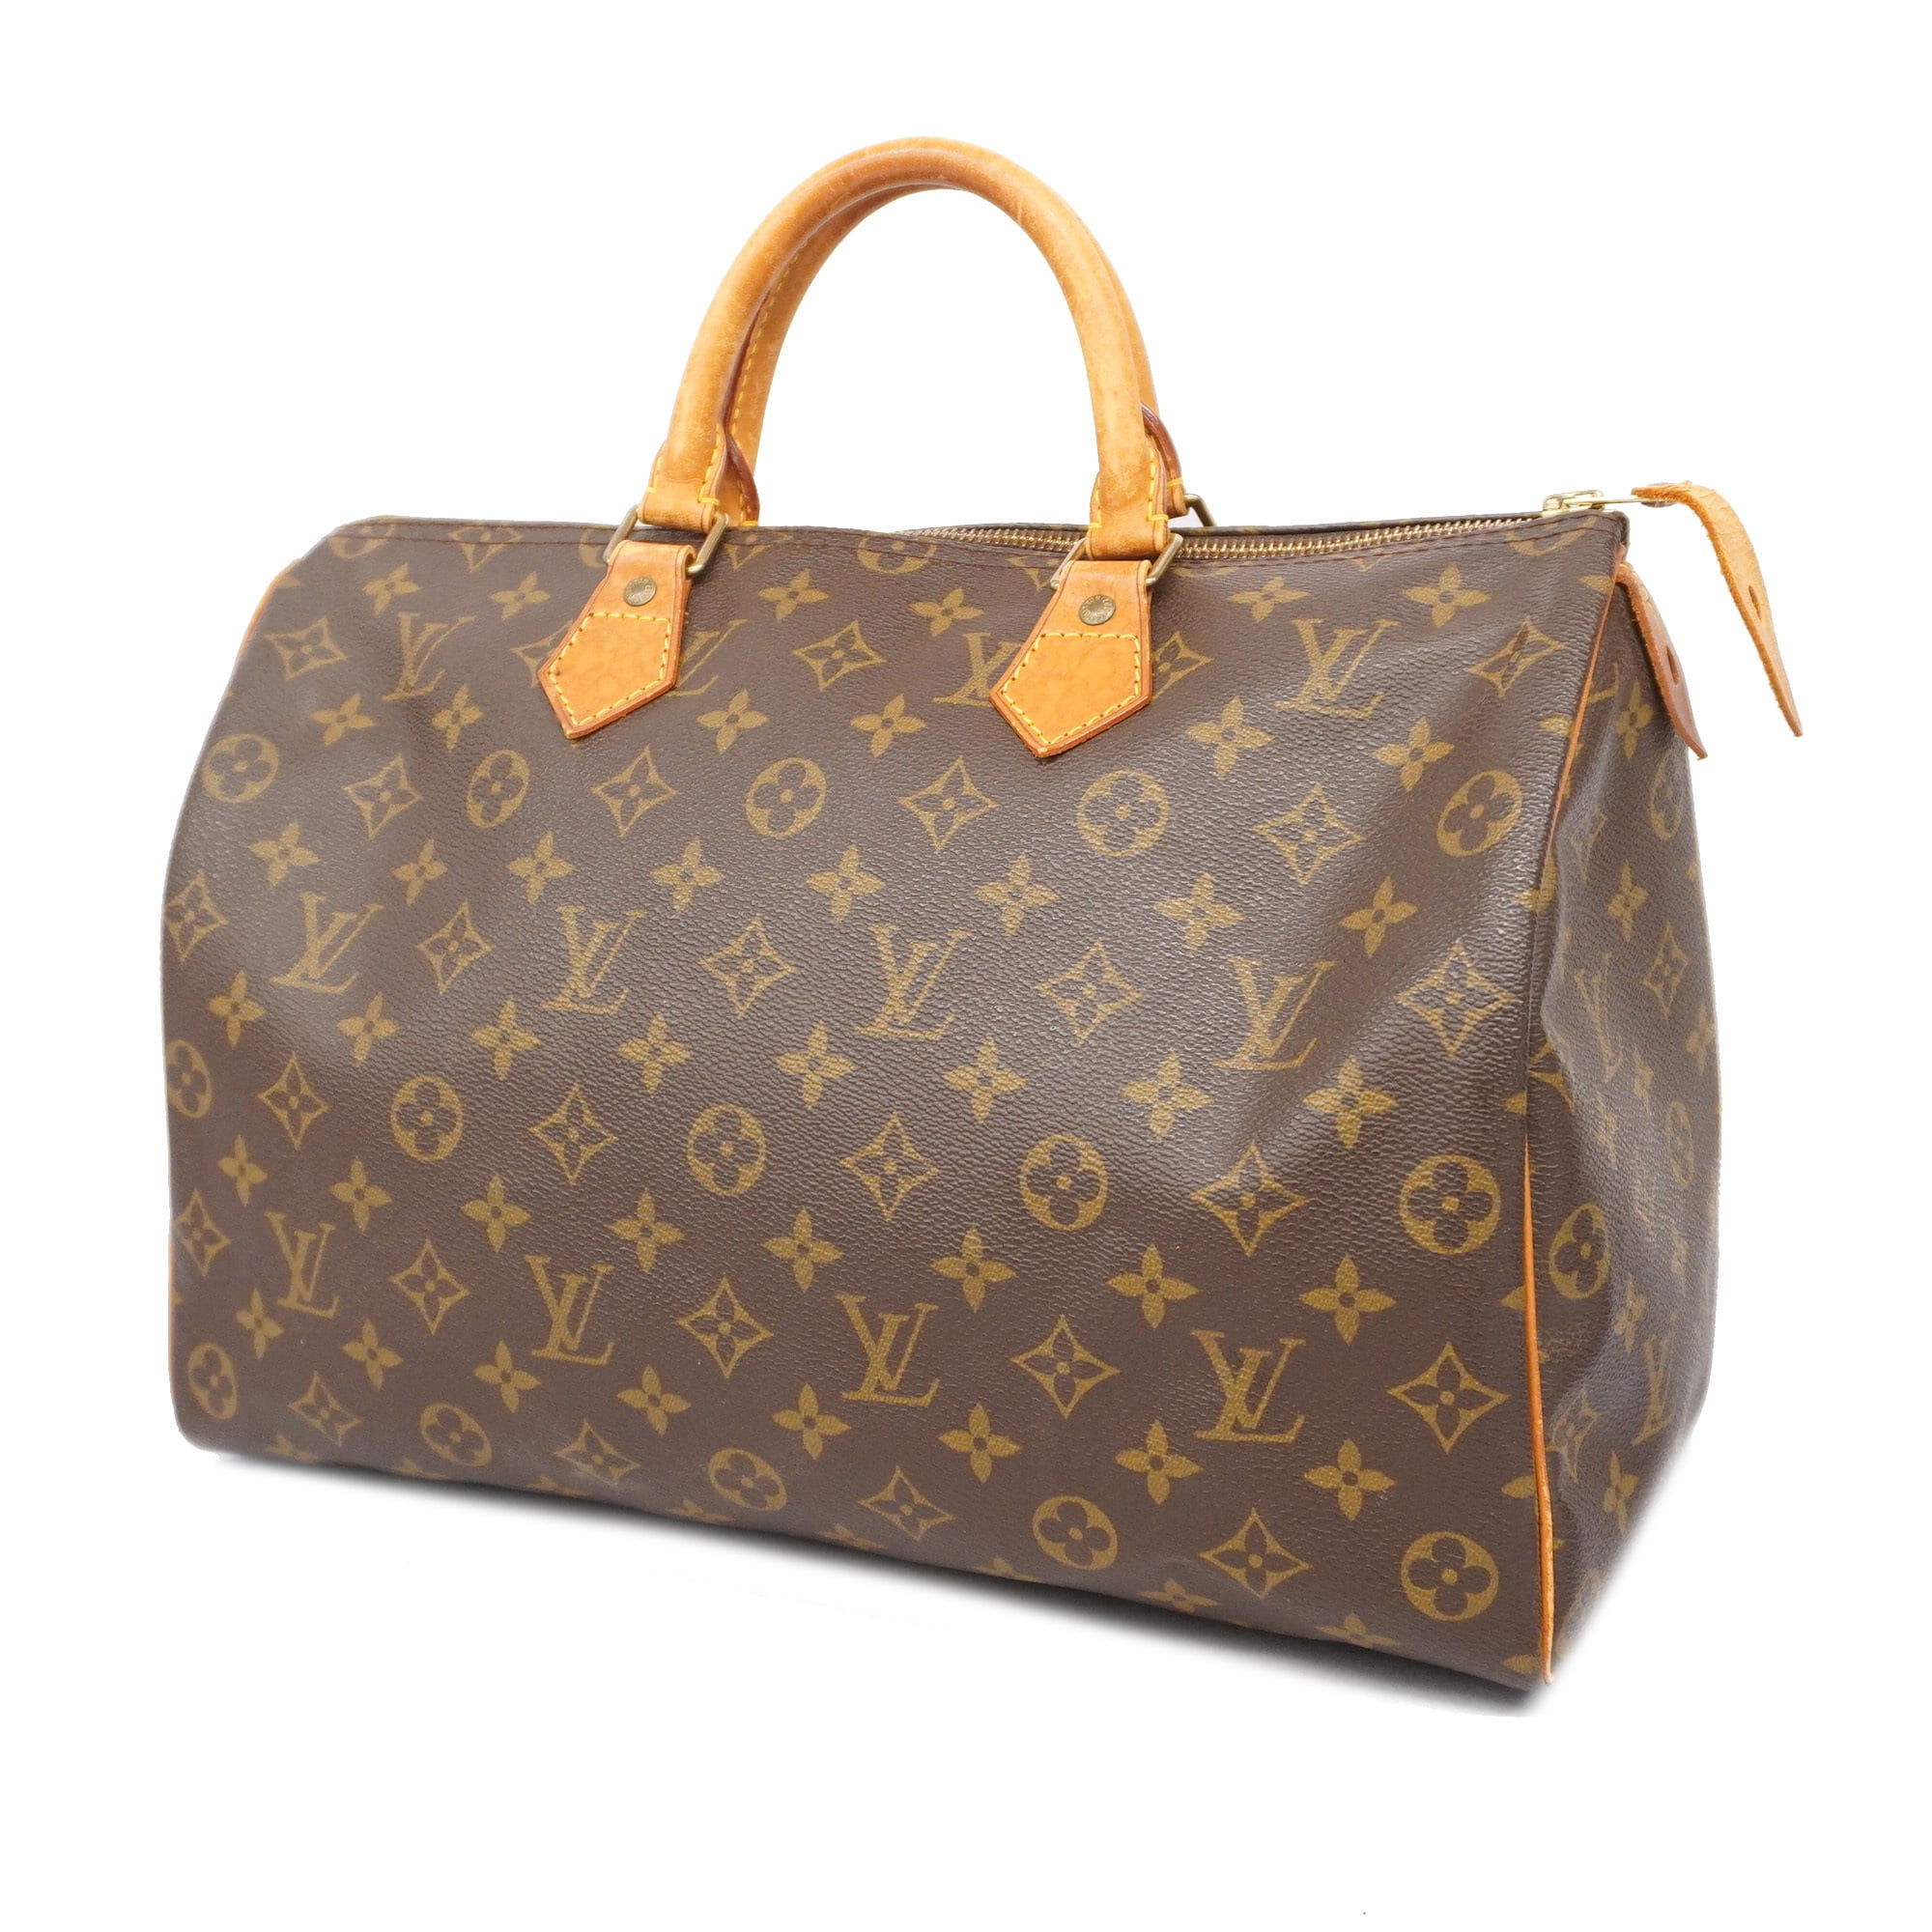 Used Auth Louis Vuitton Handbag Monogram Speedy 35 M41107 